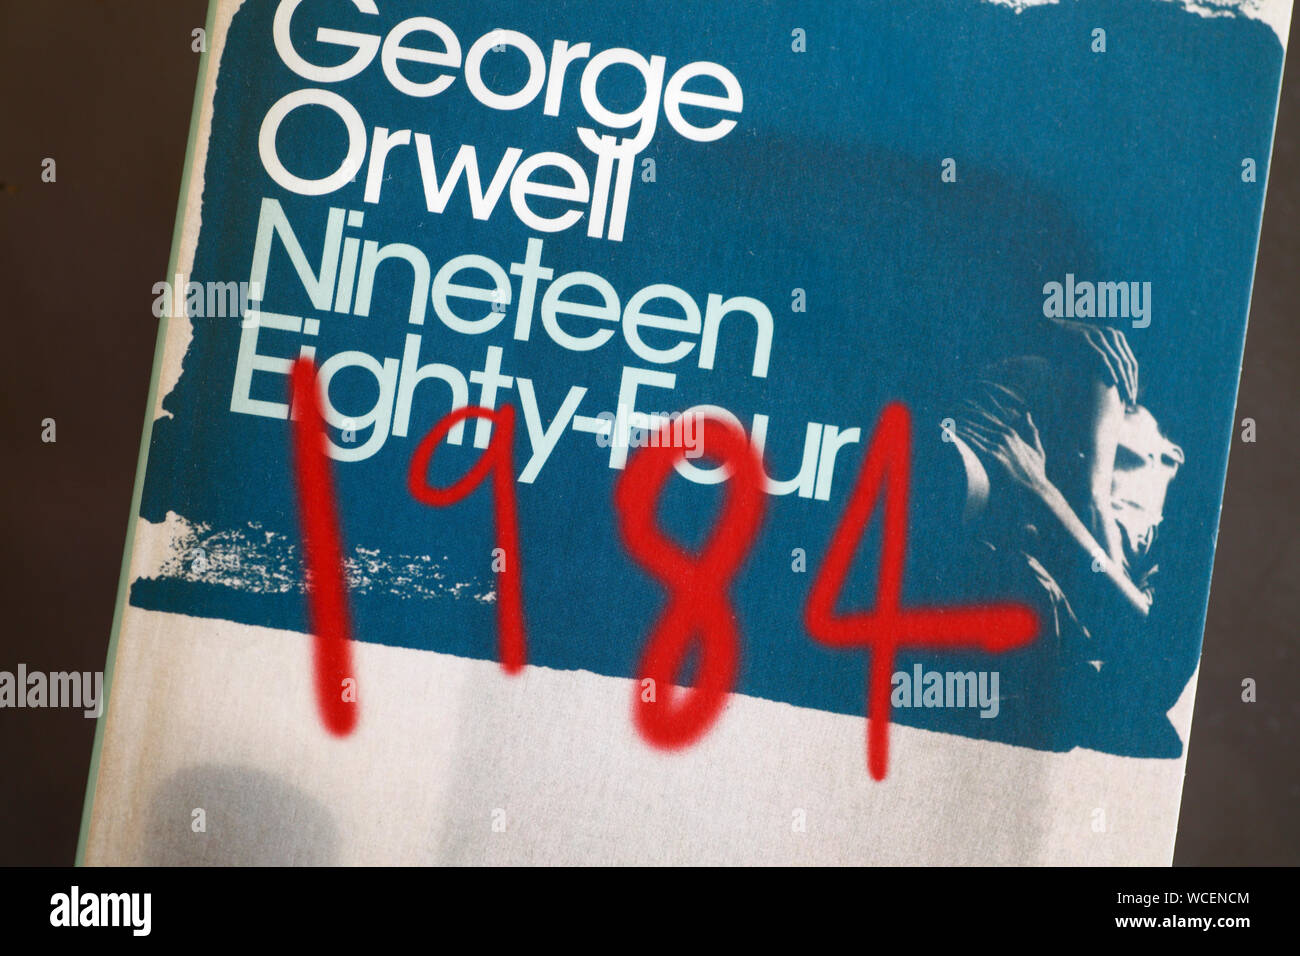 1984 George Orwell portada del libro. Foto de stock